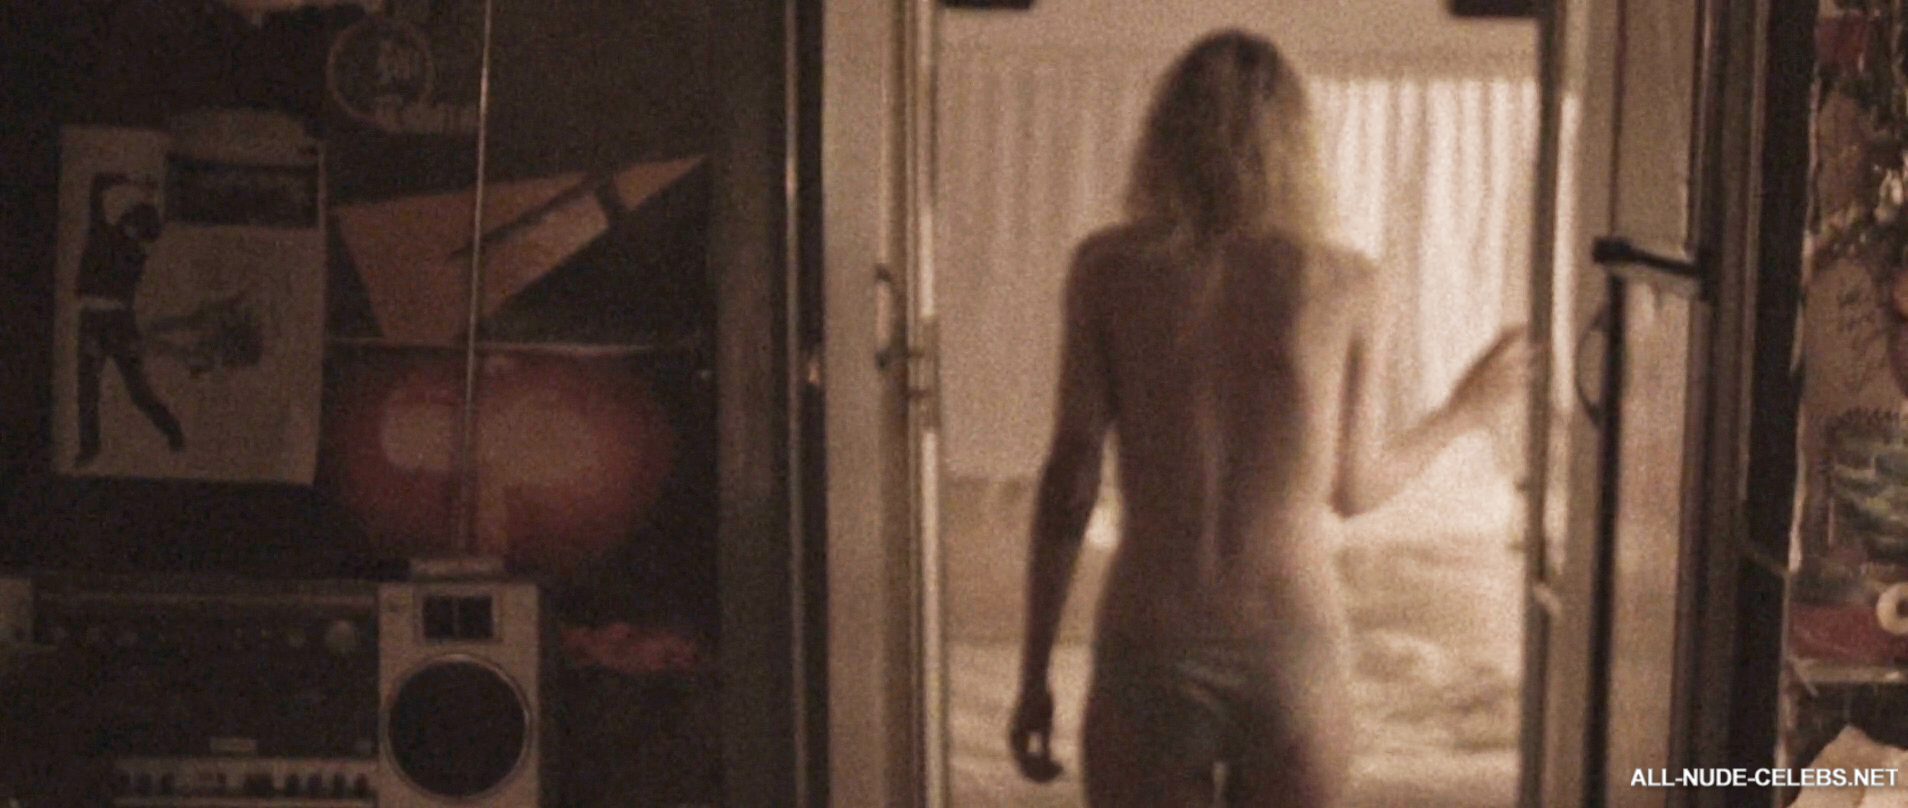 Dakota Fanning naked and sex scenes.